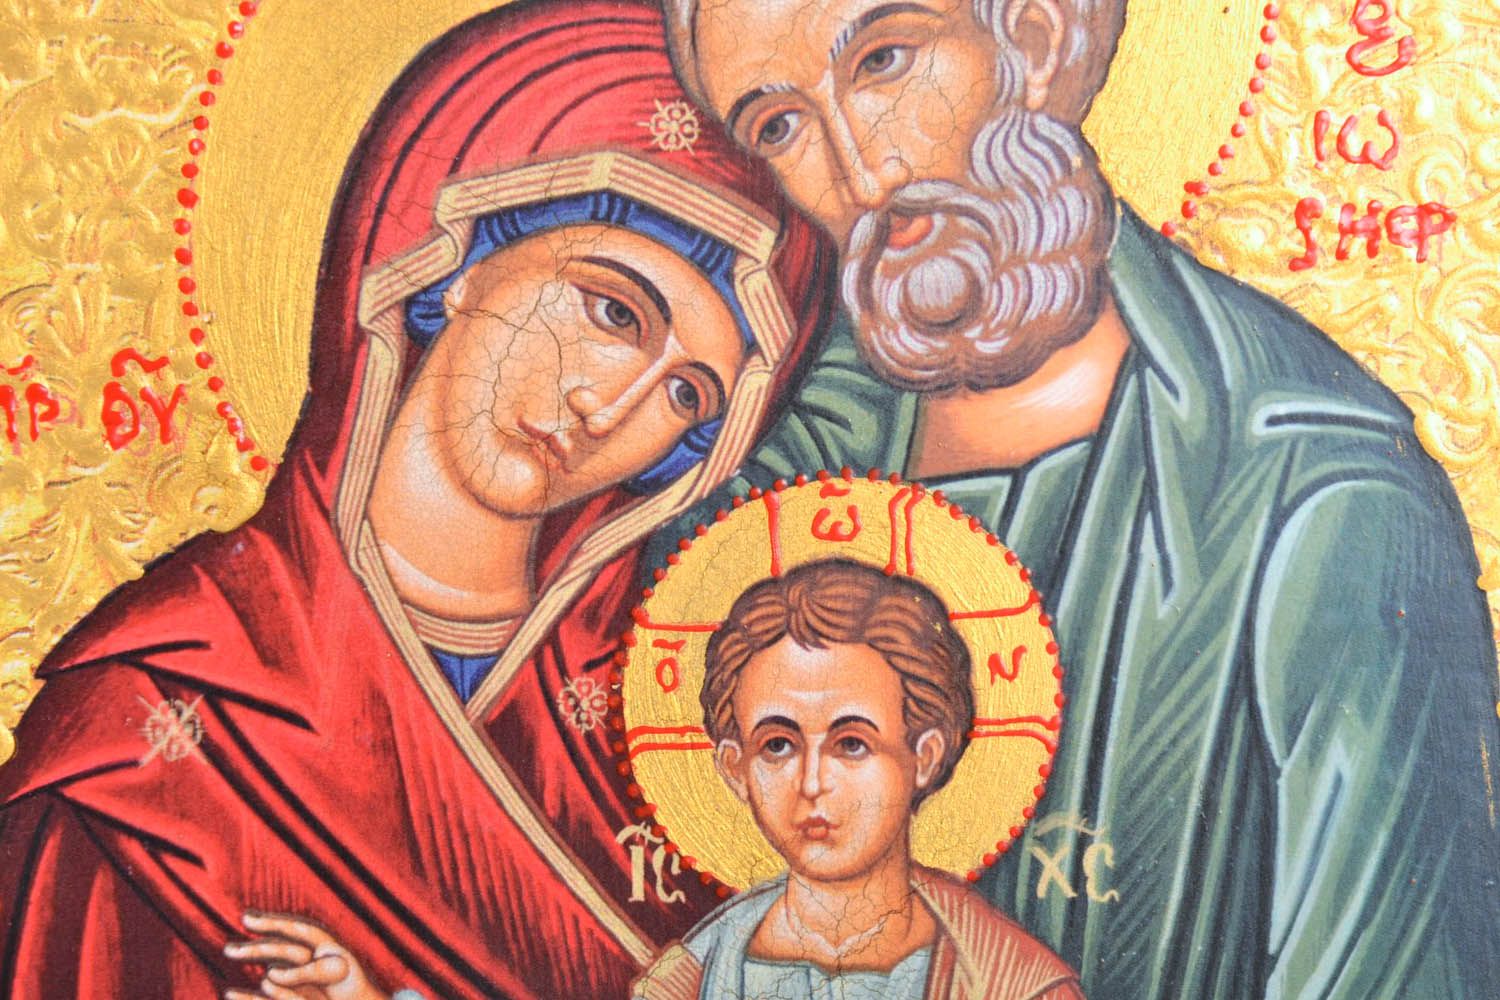 Ikone Reproduktion gedruckt Die heilige Familie foto 5